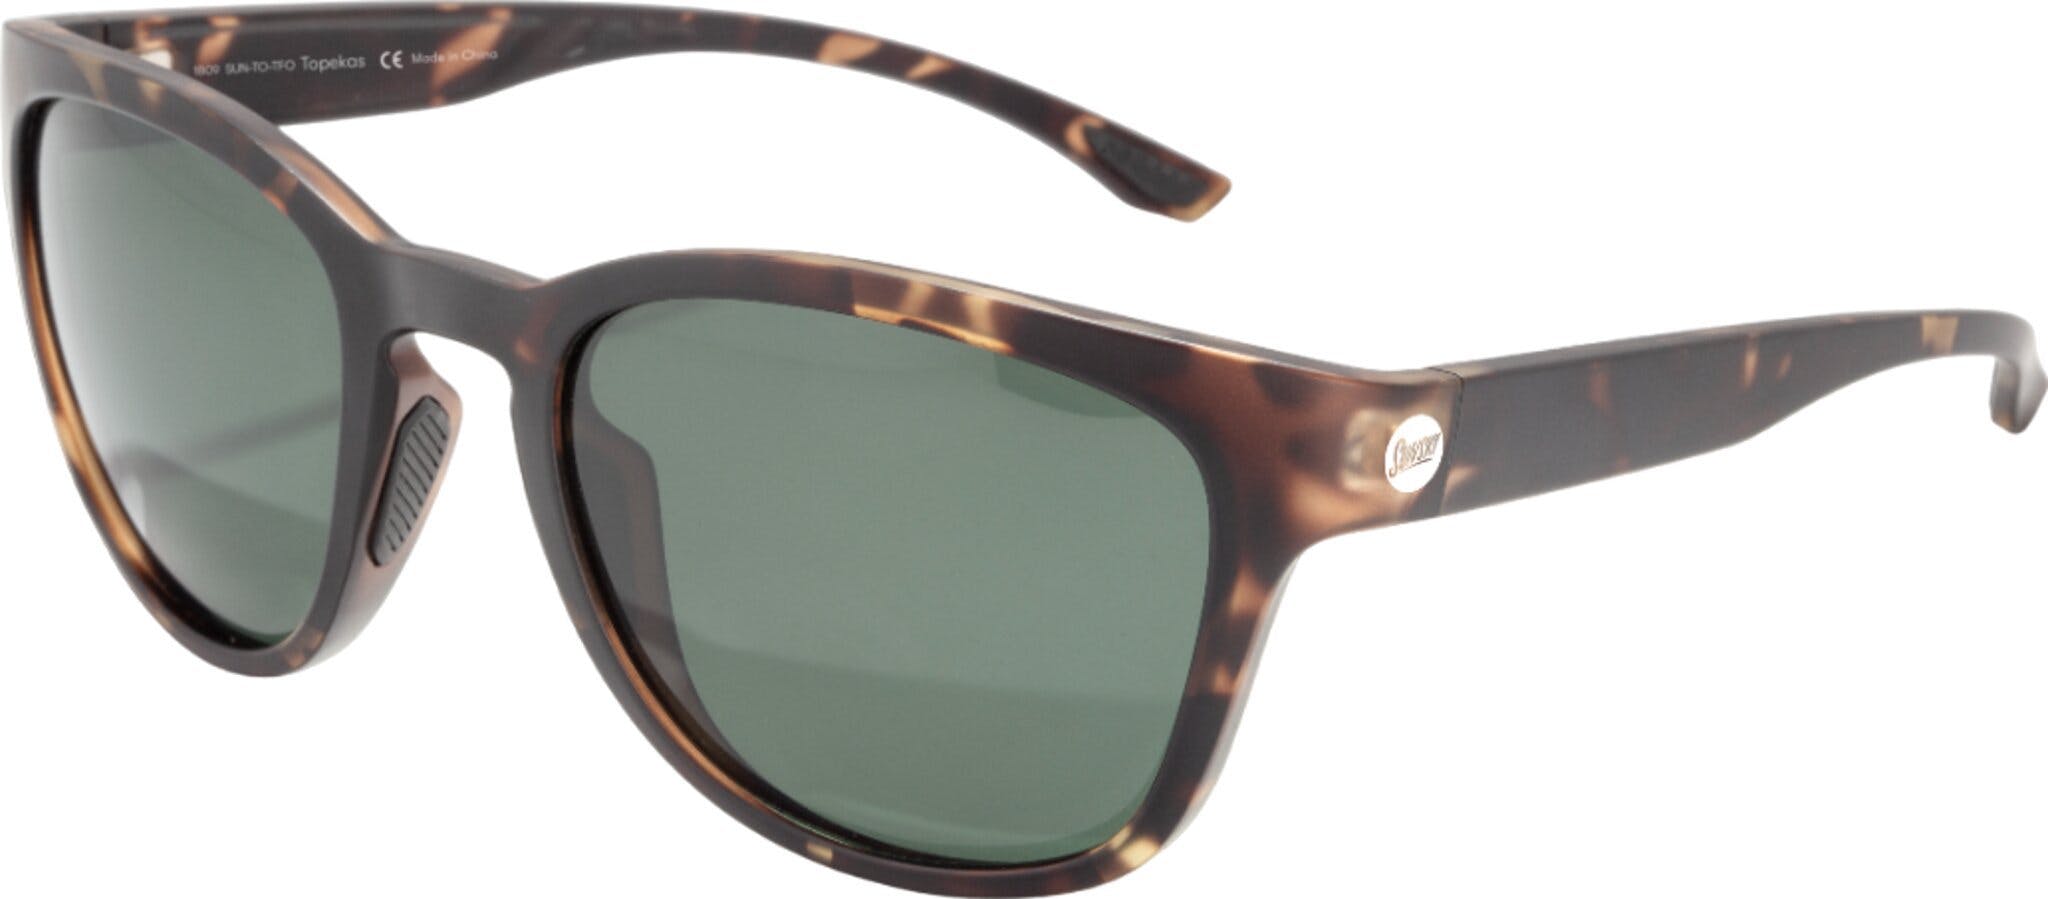 Product image for Topeka Sunglasses